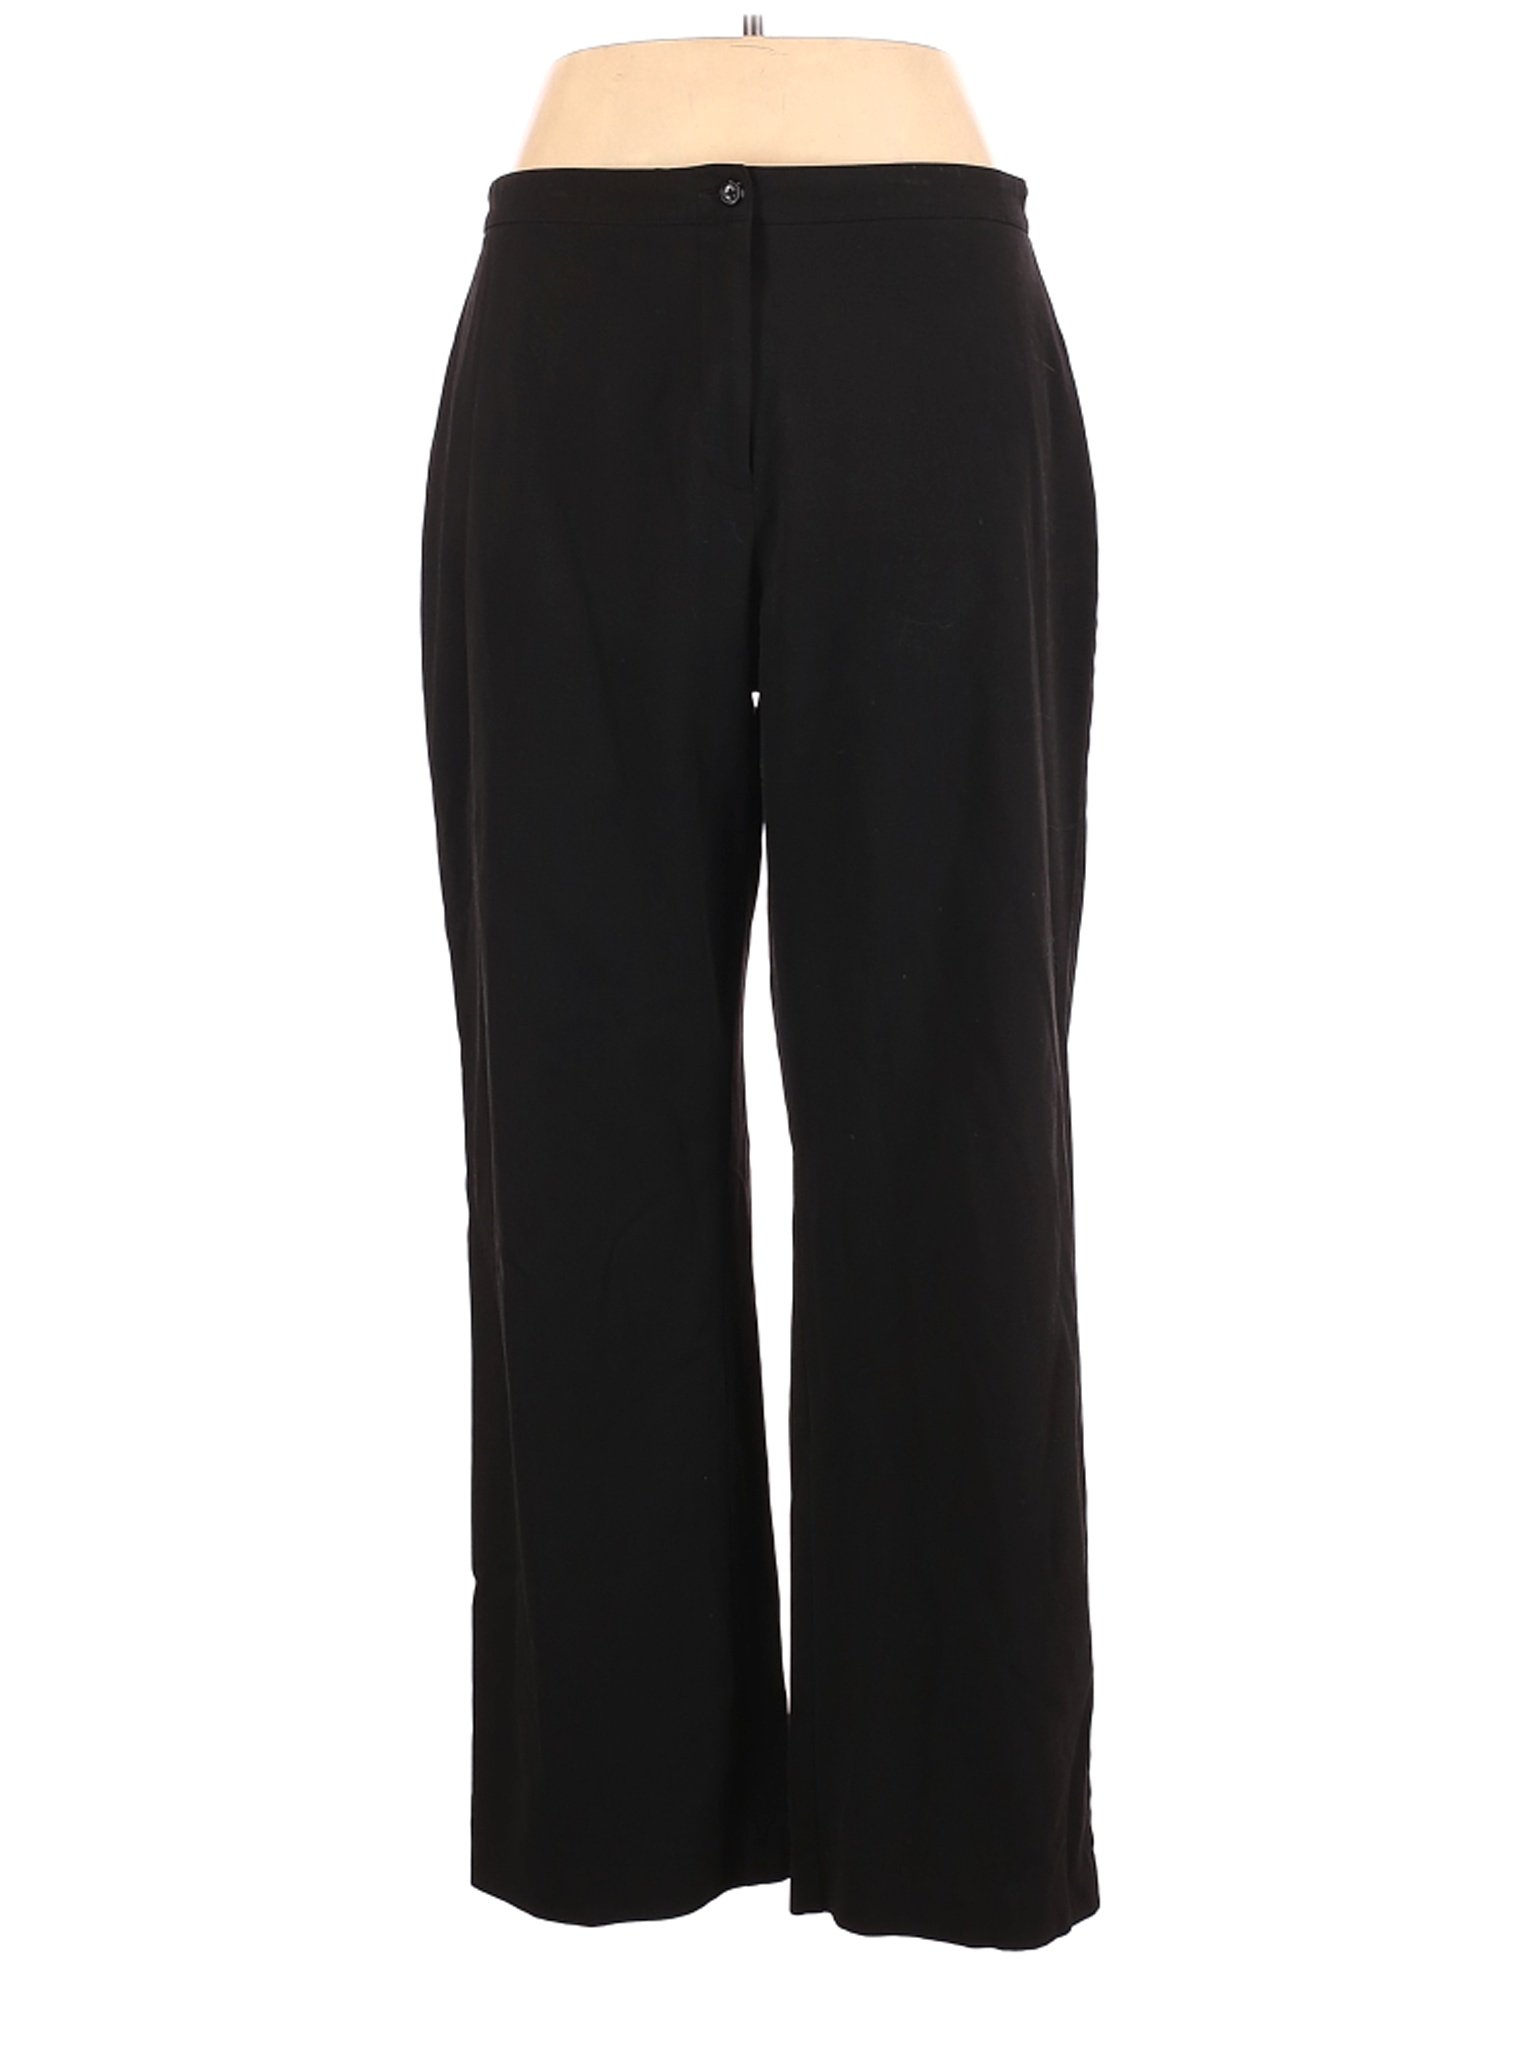 David Dart Women Black Casual Pants 14 | eBay